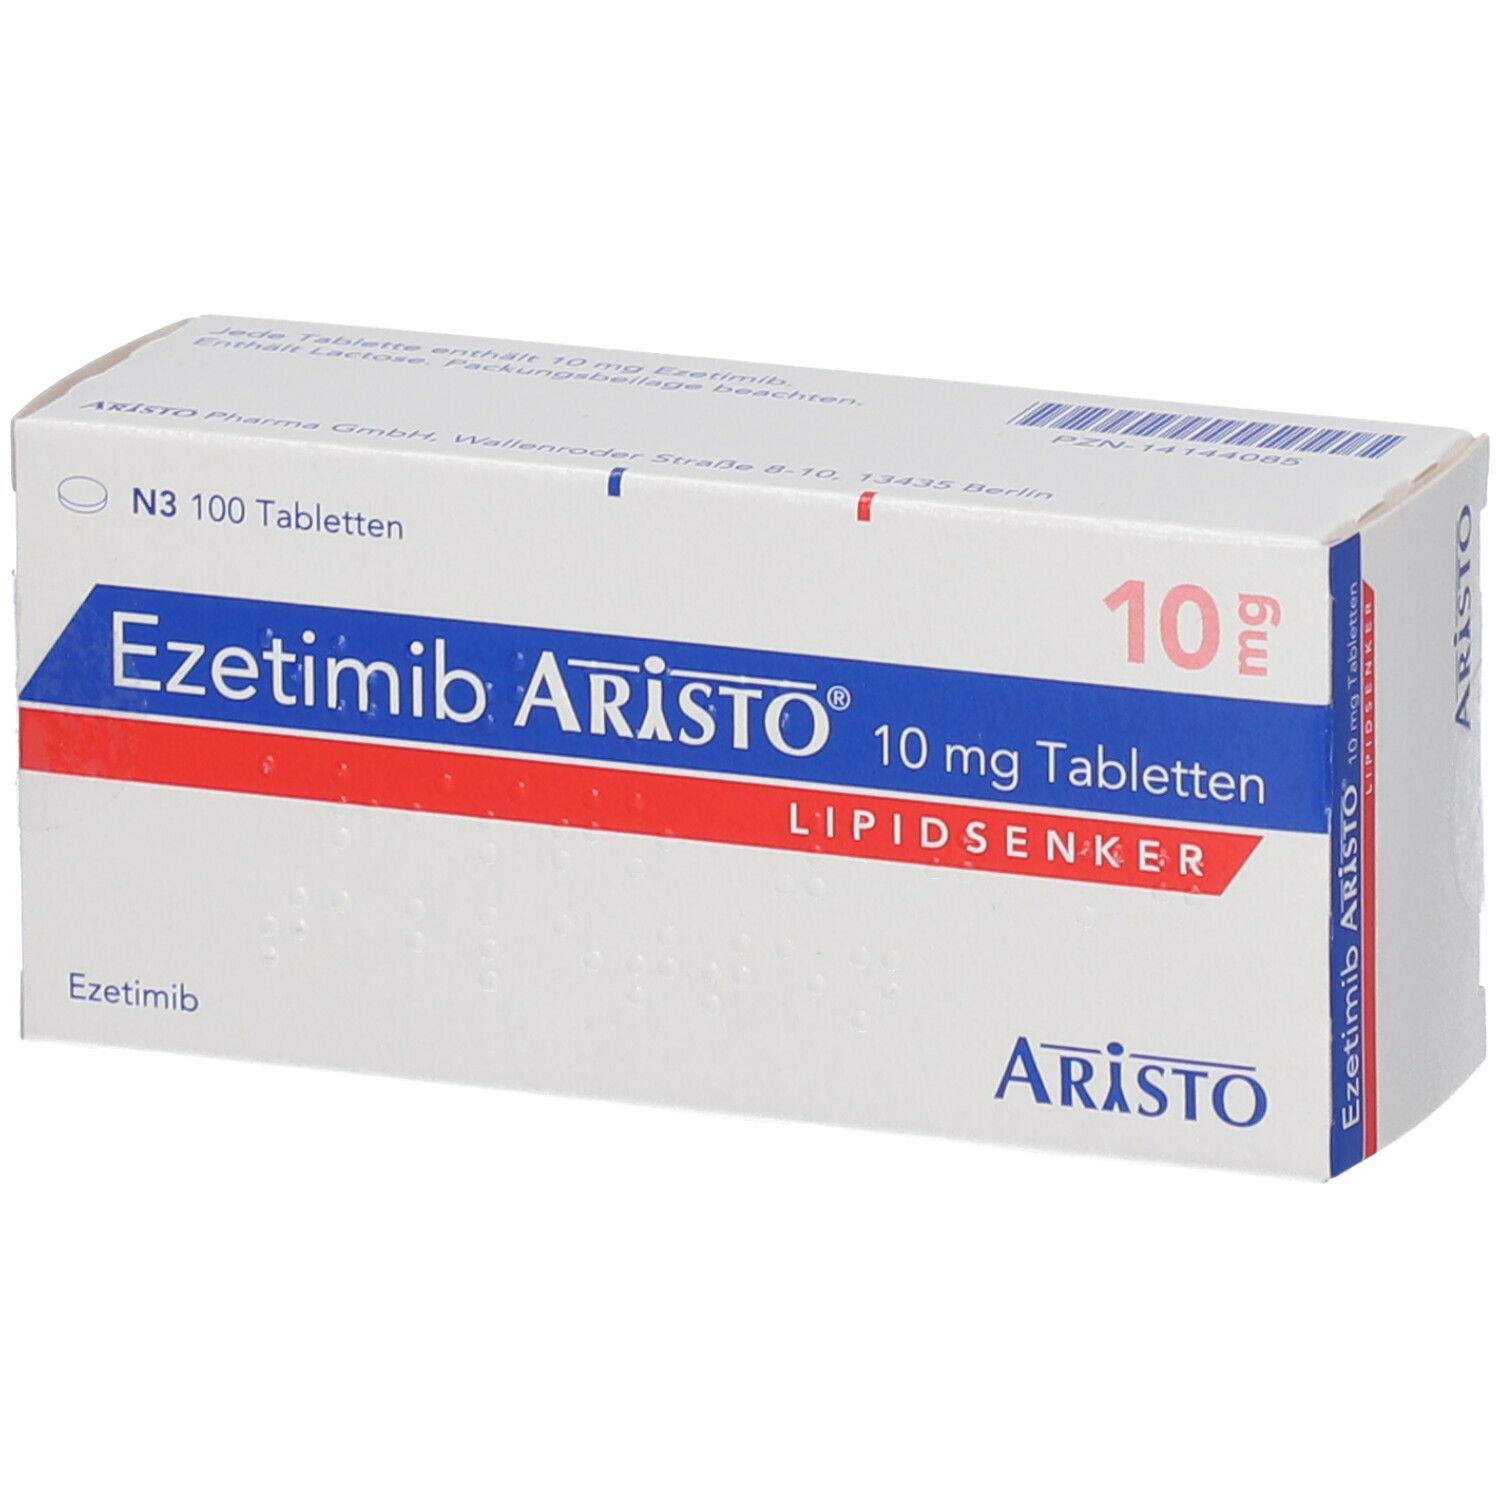 Ezetimib Aristo® 10 mg